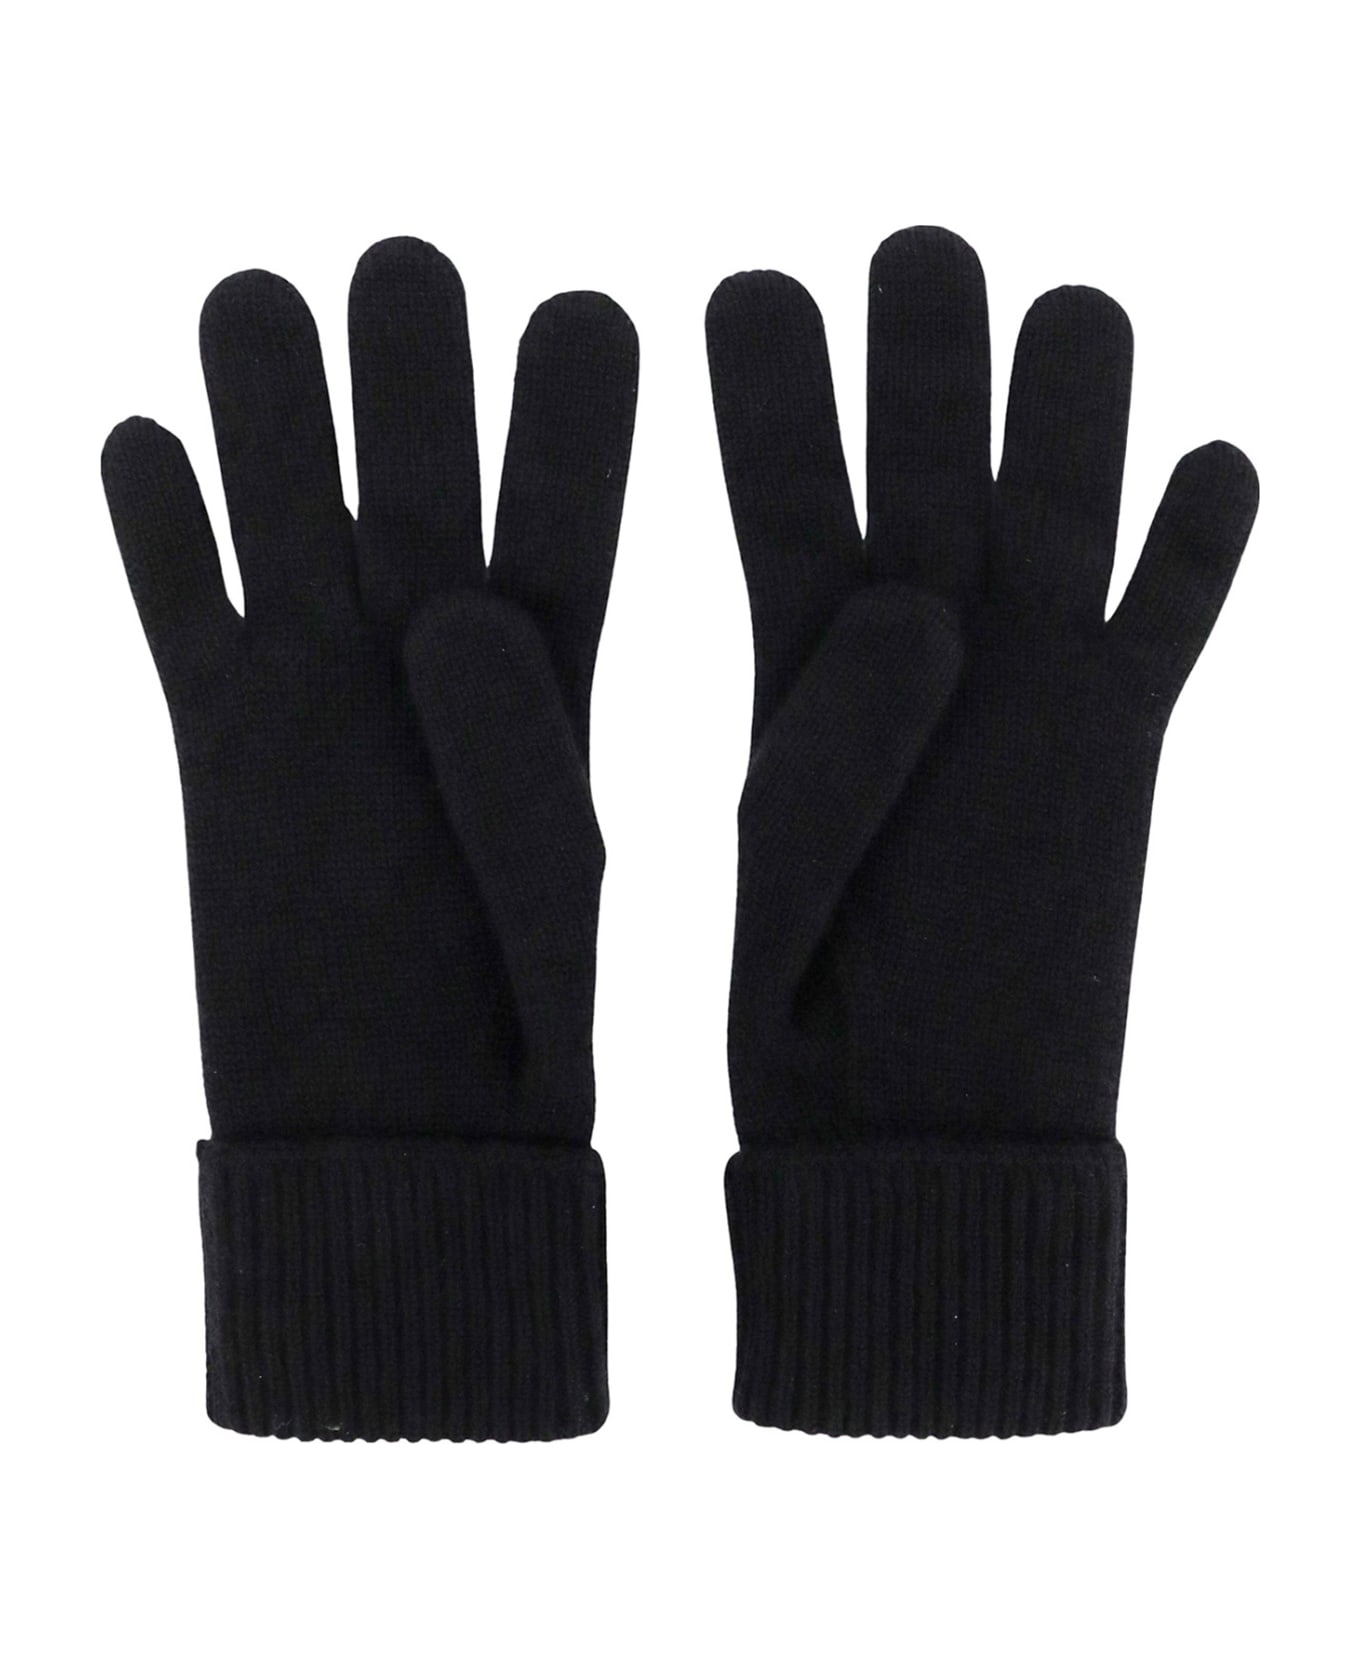 Burberry Cashmere Blend Gloves - Black name:462